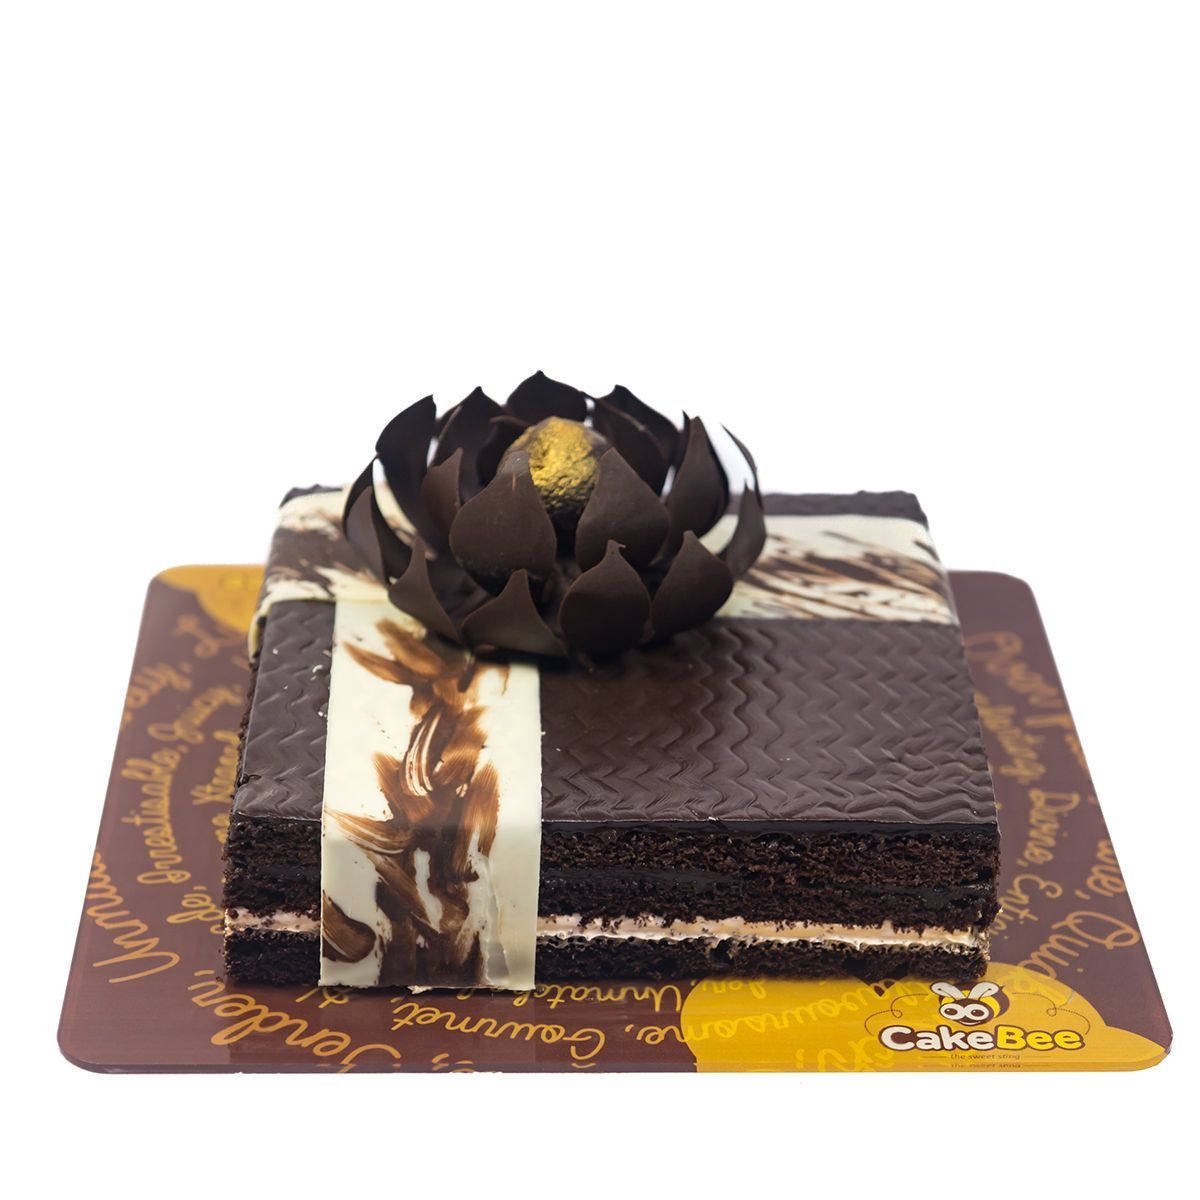 square chocolate cake decorations